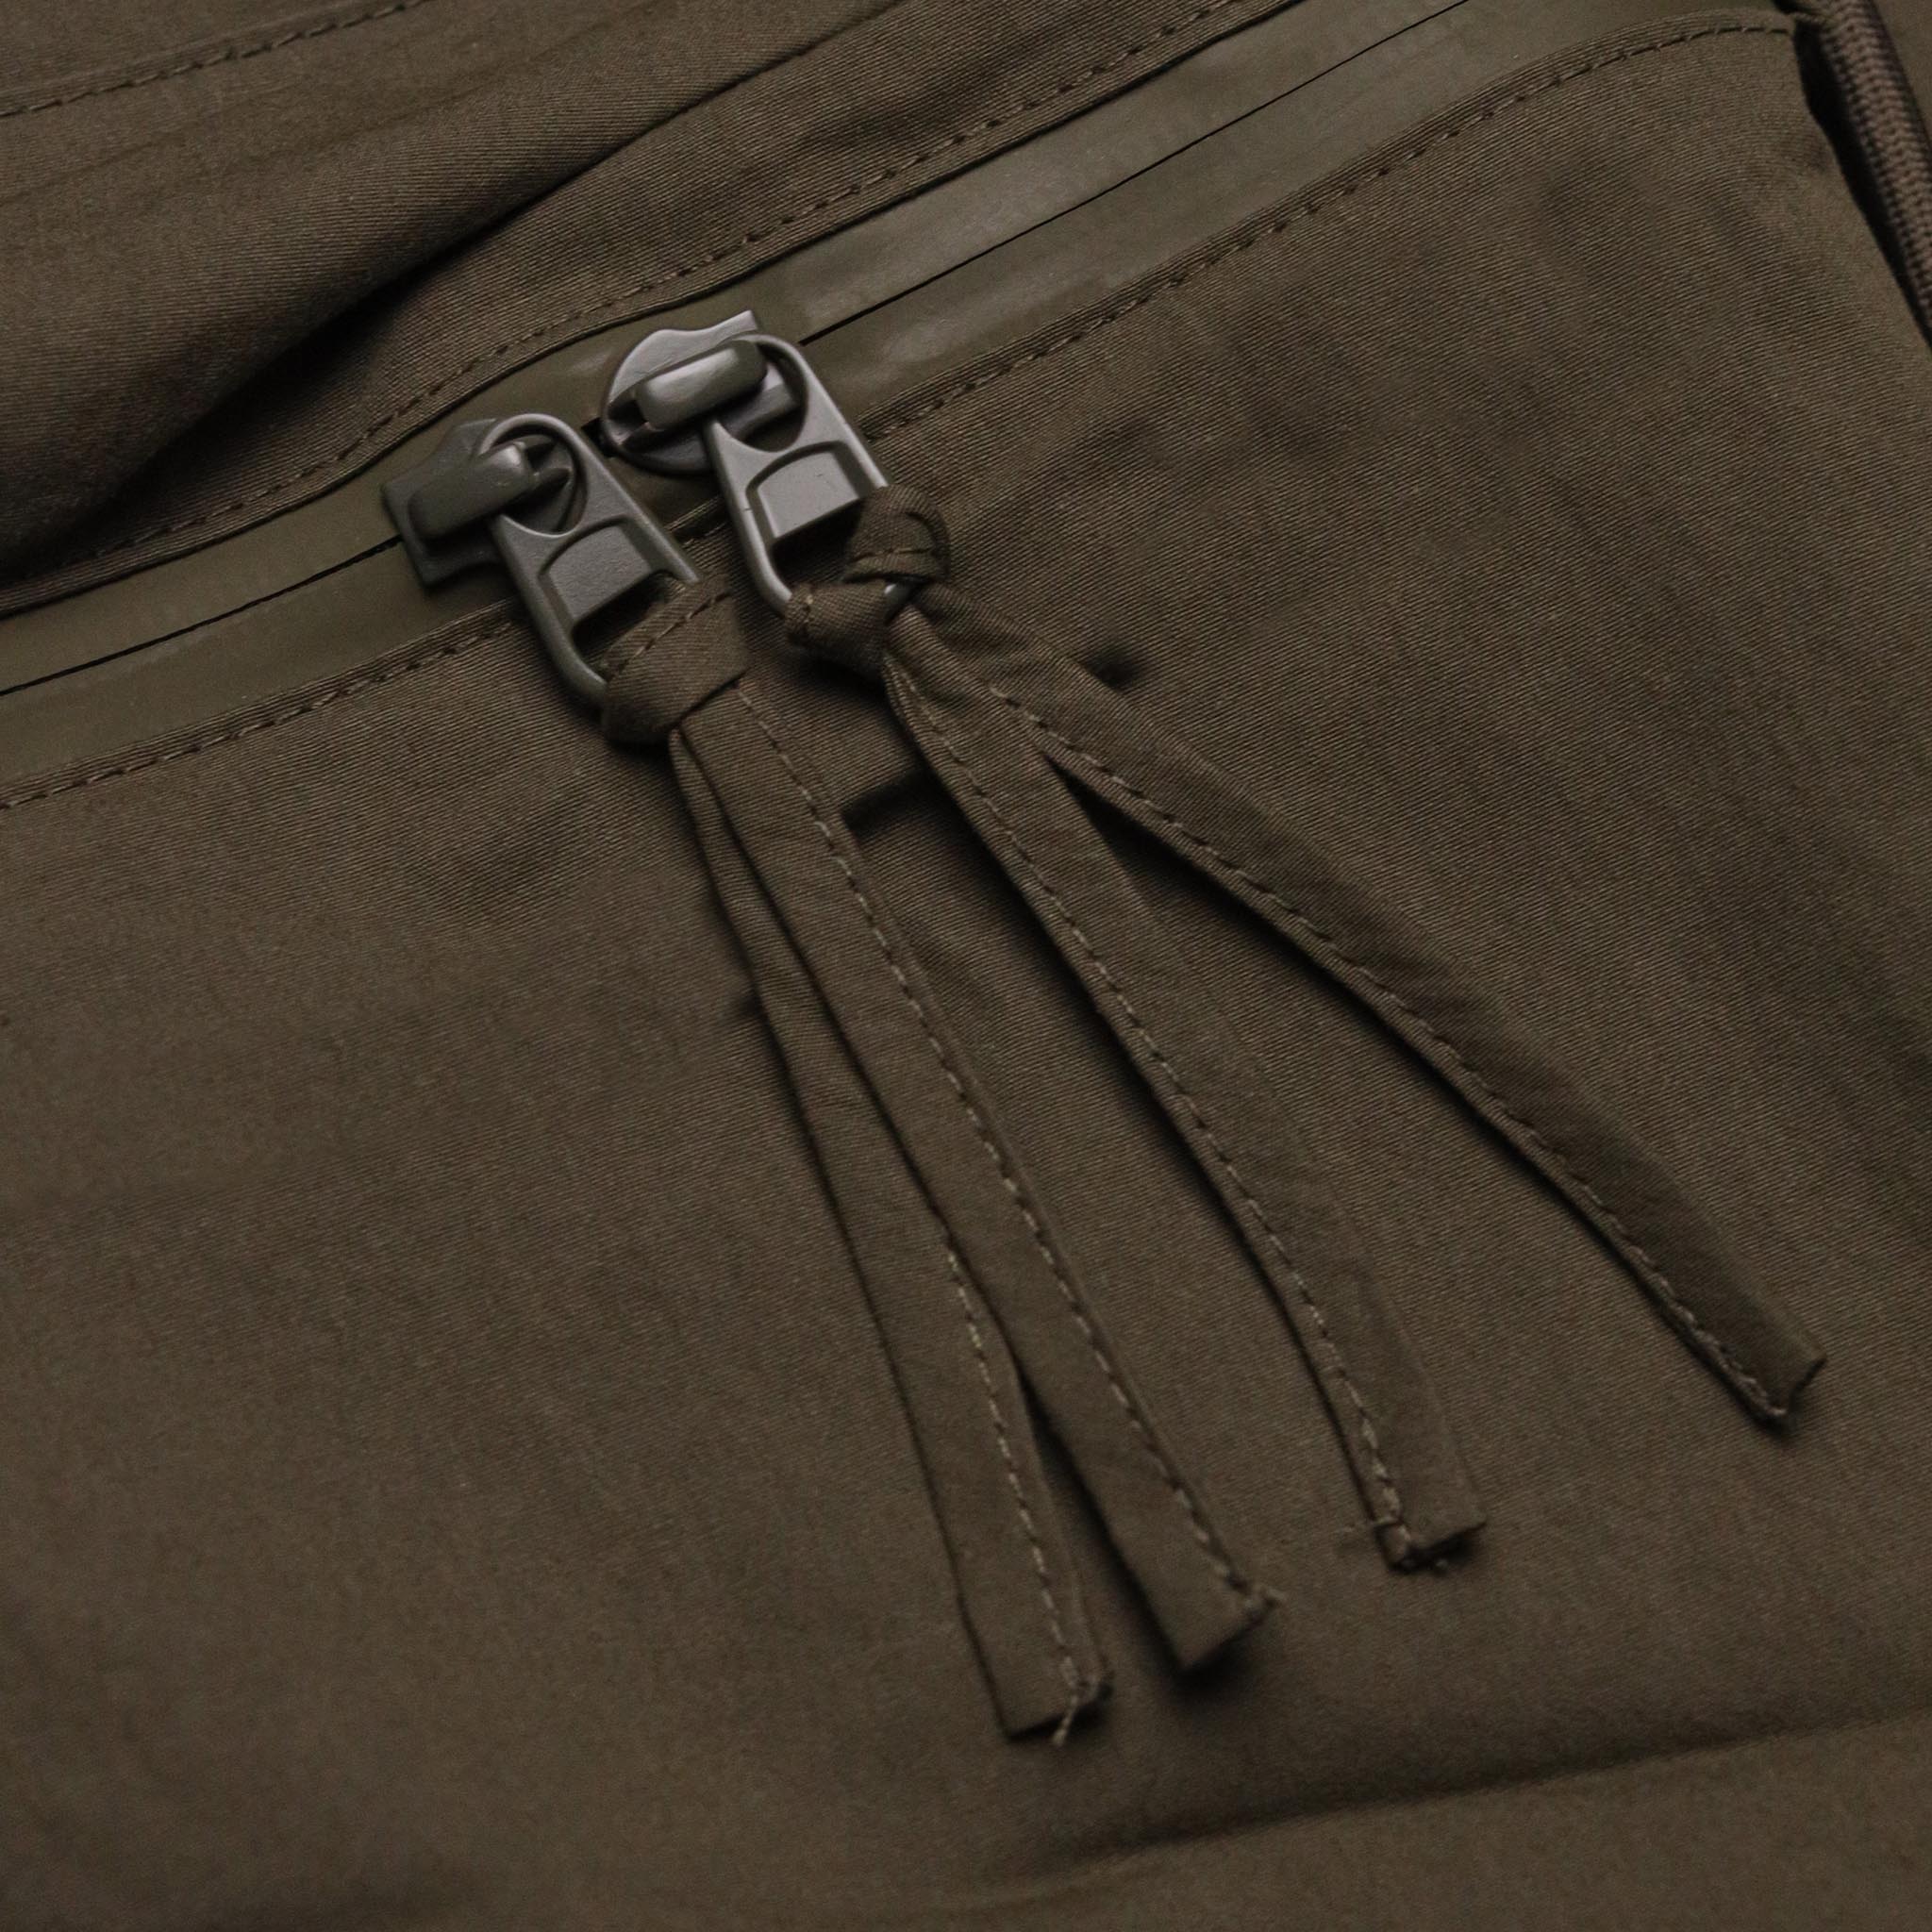 HOMME+ Nylon Cargo Pocket Pants Army